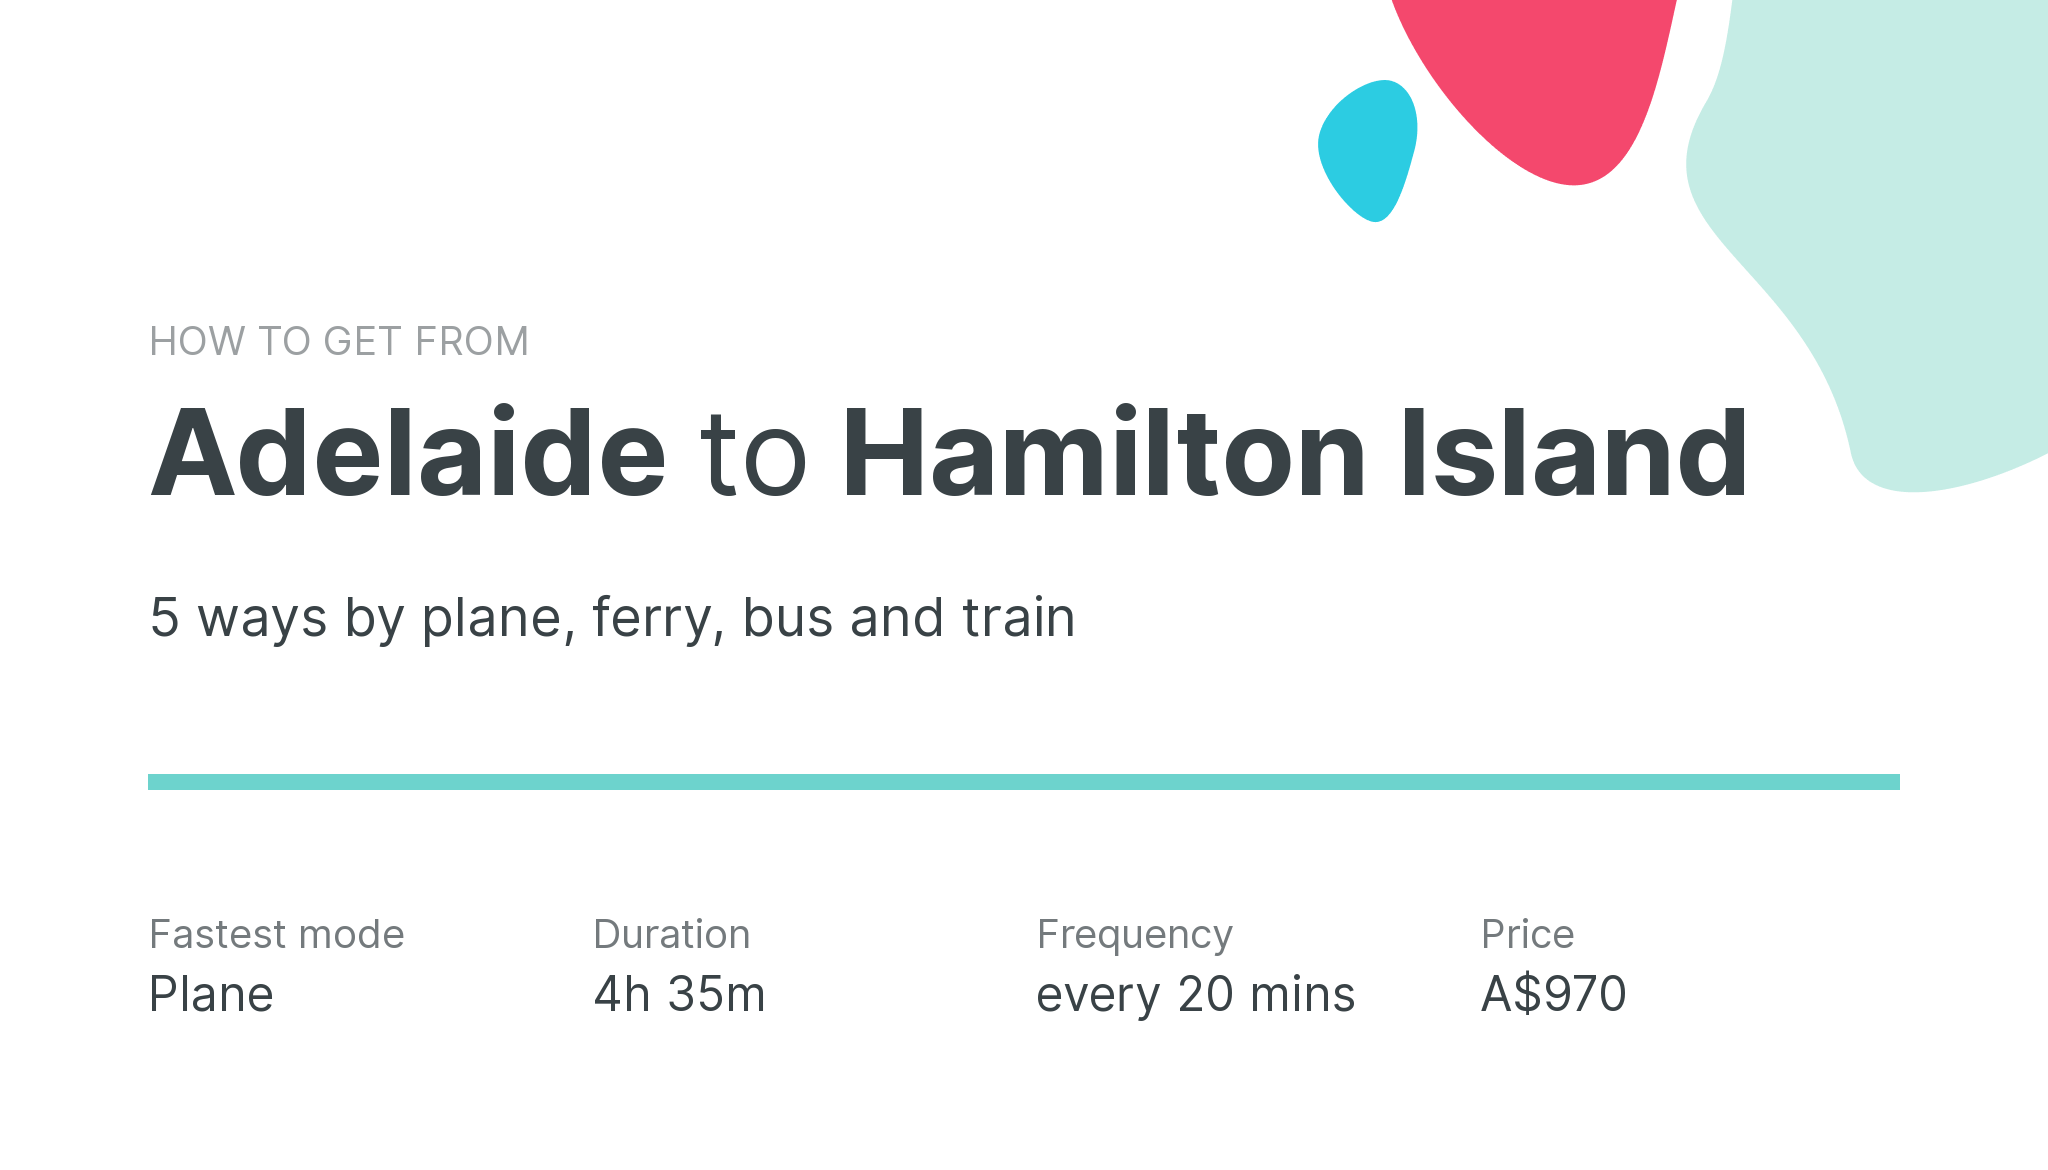 How do I get from Adelaide to Hamilton Island